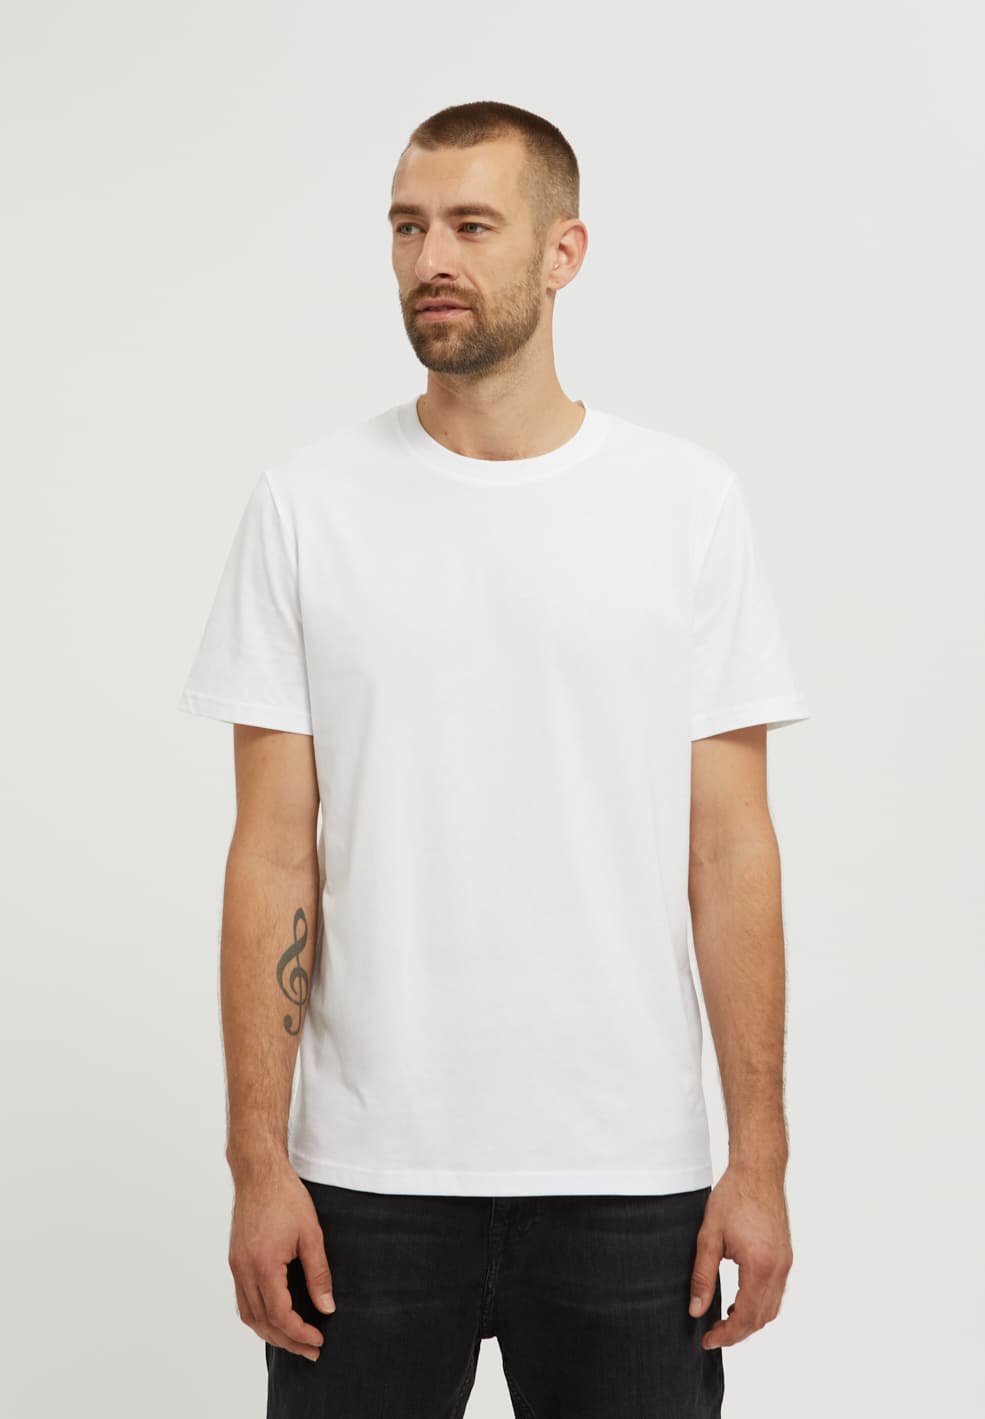 AADO VIEW T-Shirt made of Organic Cotton